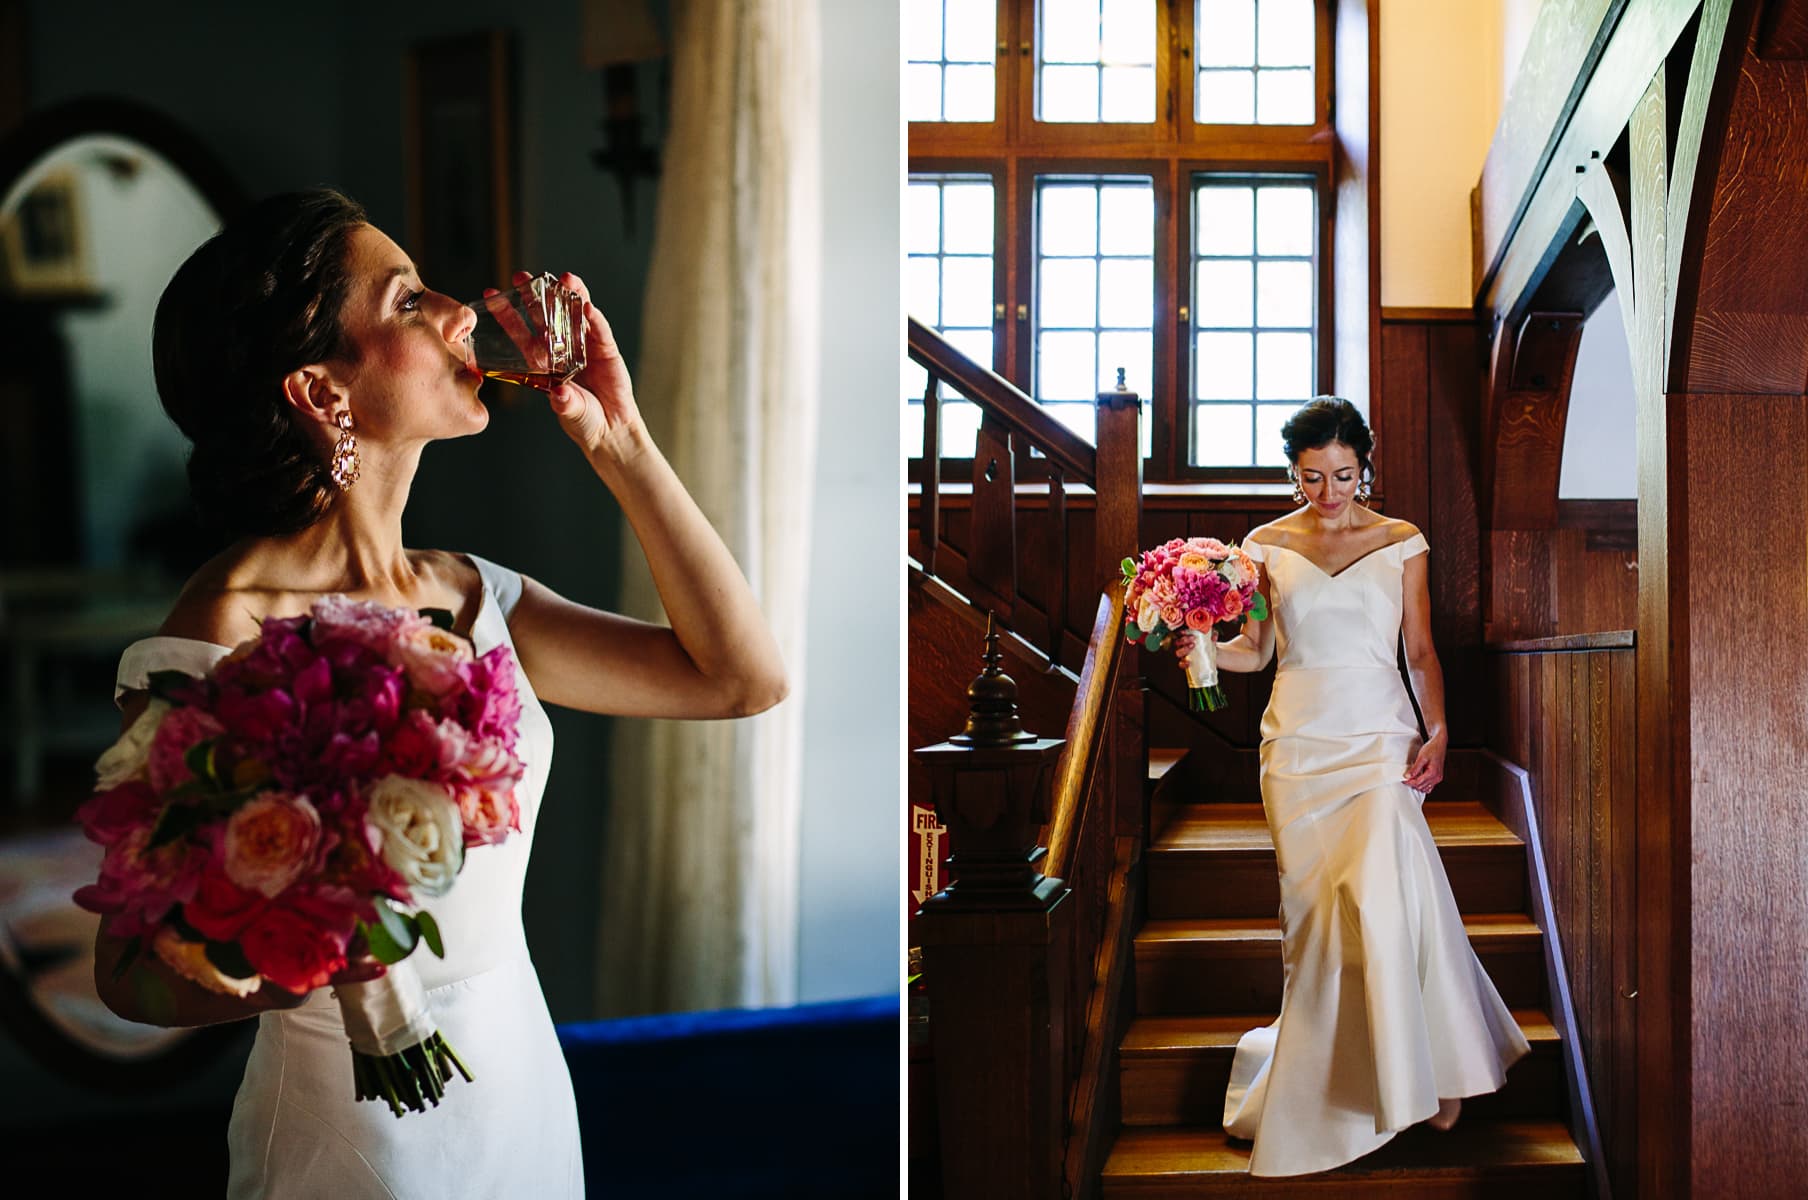 Willowdale Estate wedding in Topsfield, MA | Kelly Benvenuto Photography | Boston Wedding Photographer